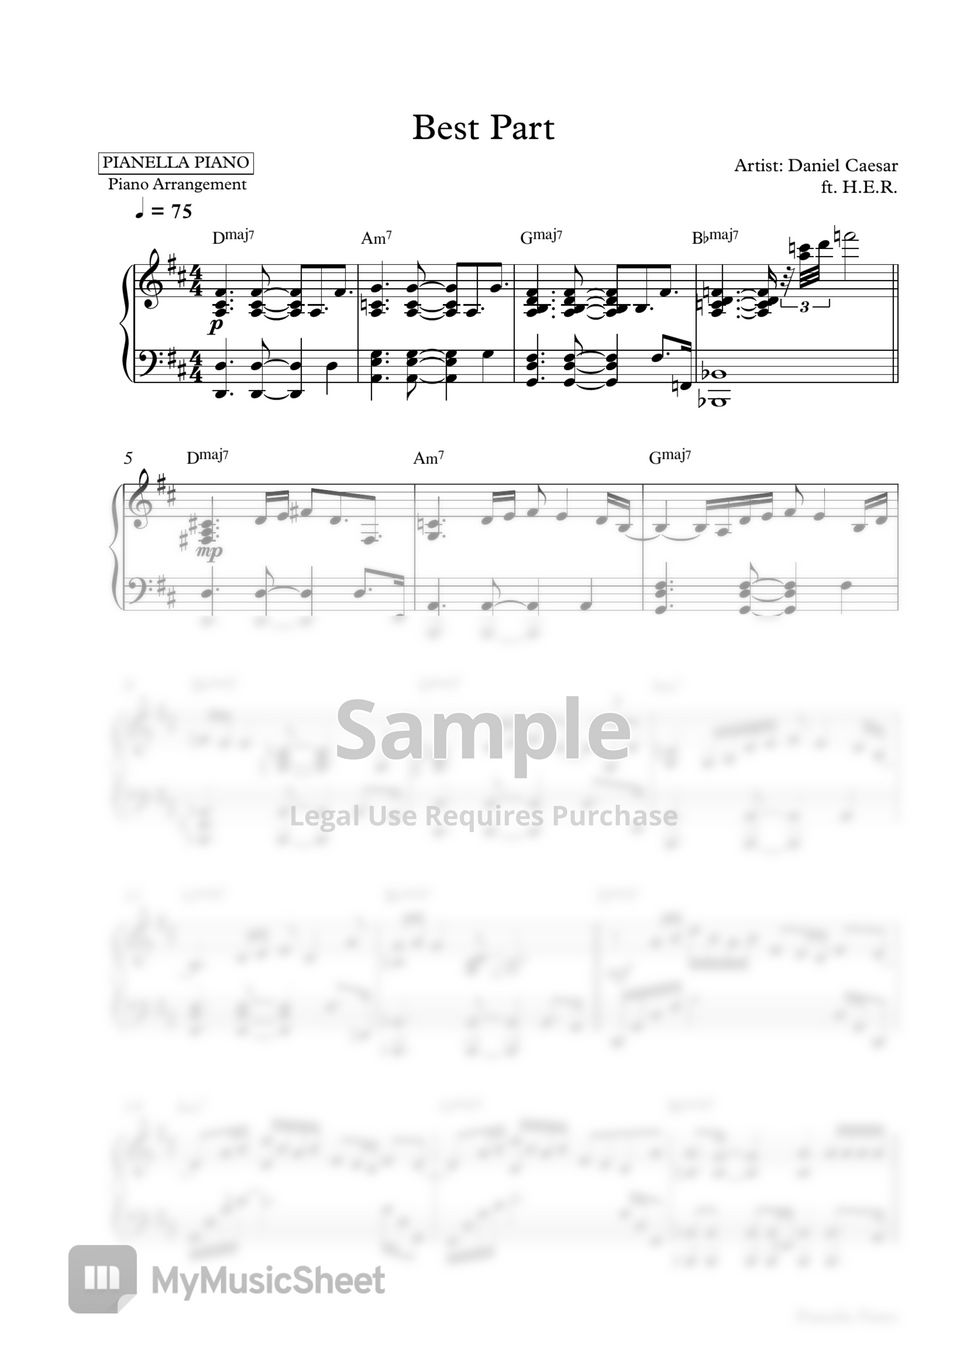 Daniel Caesar ft. H.E.R. - Best Part (Piano Sheet) by Pianella Piano